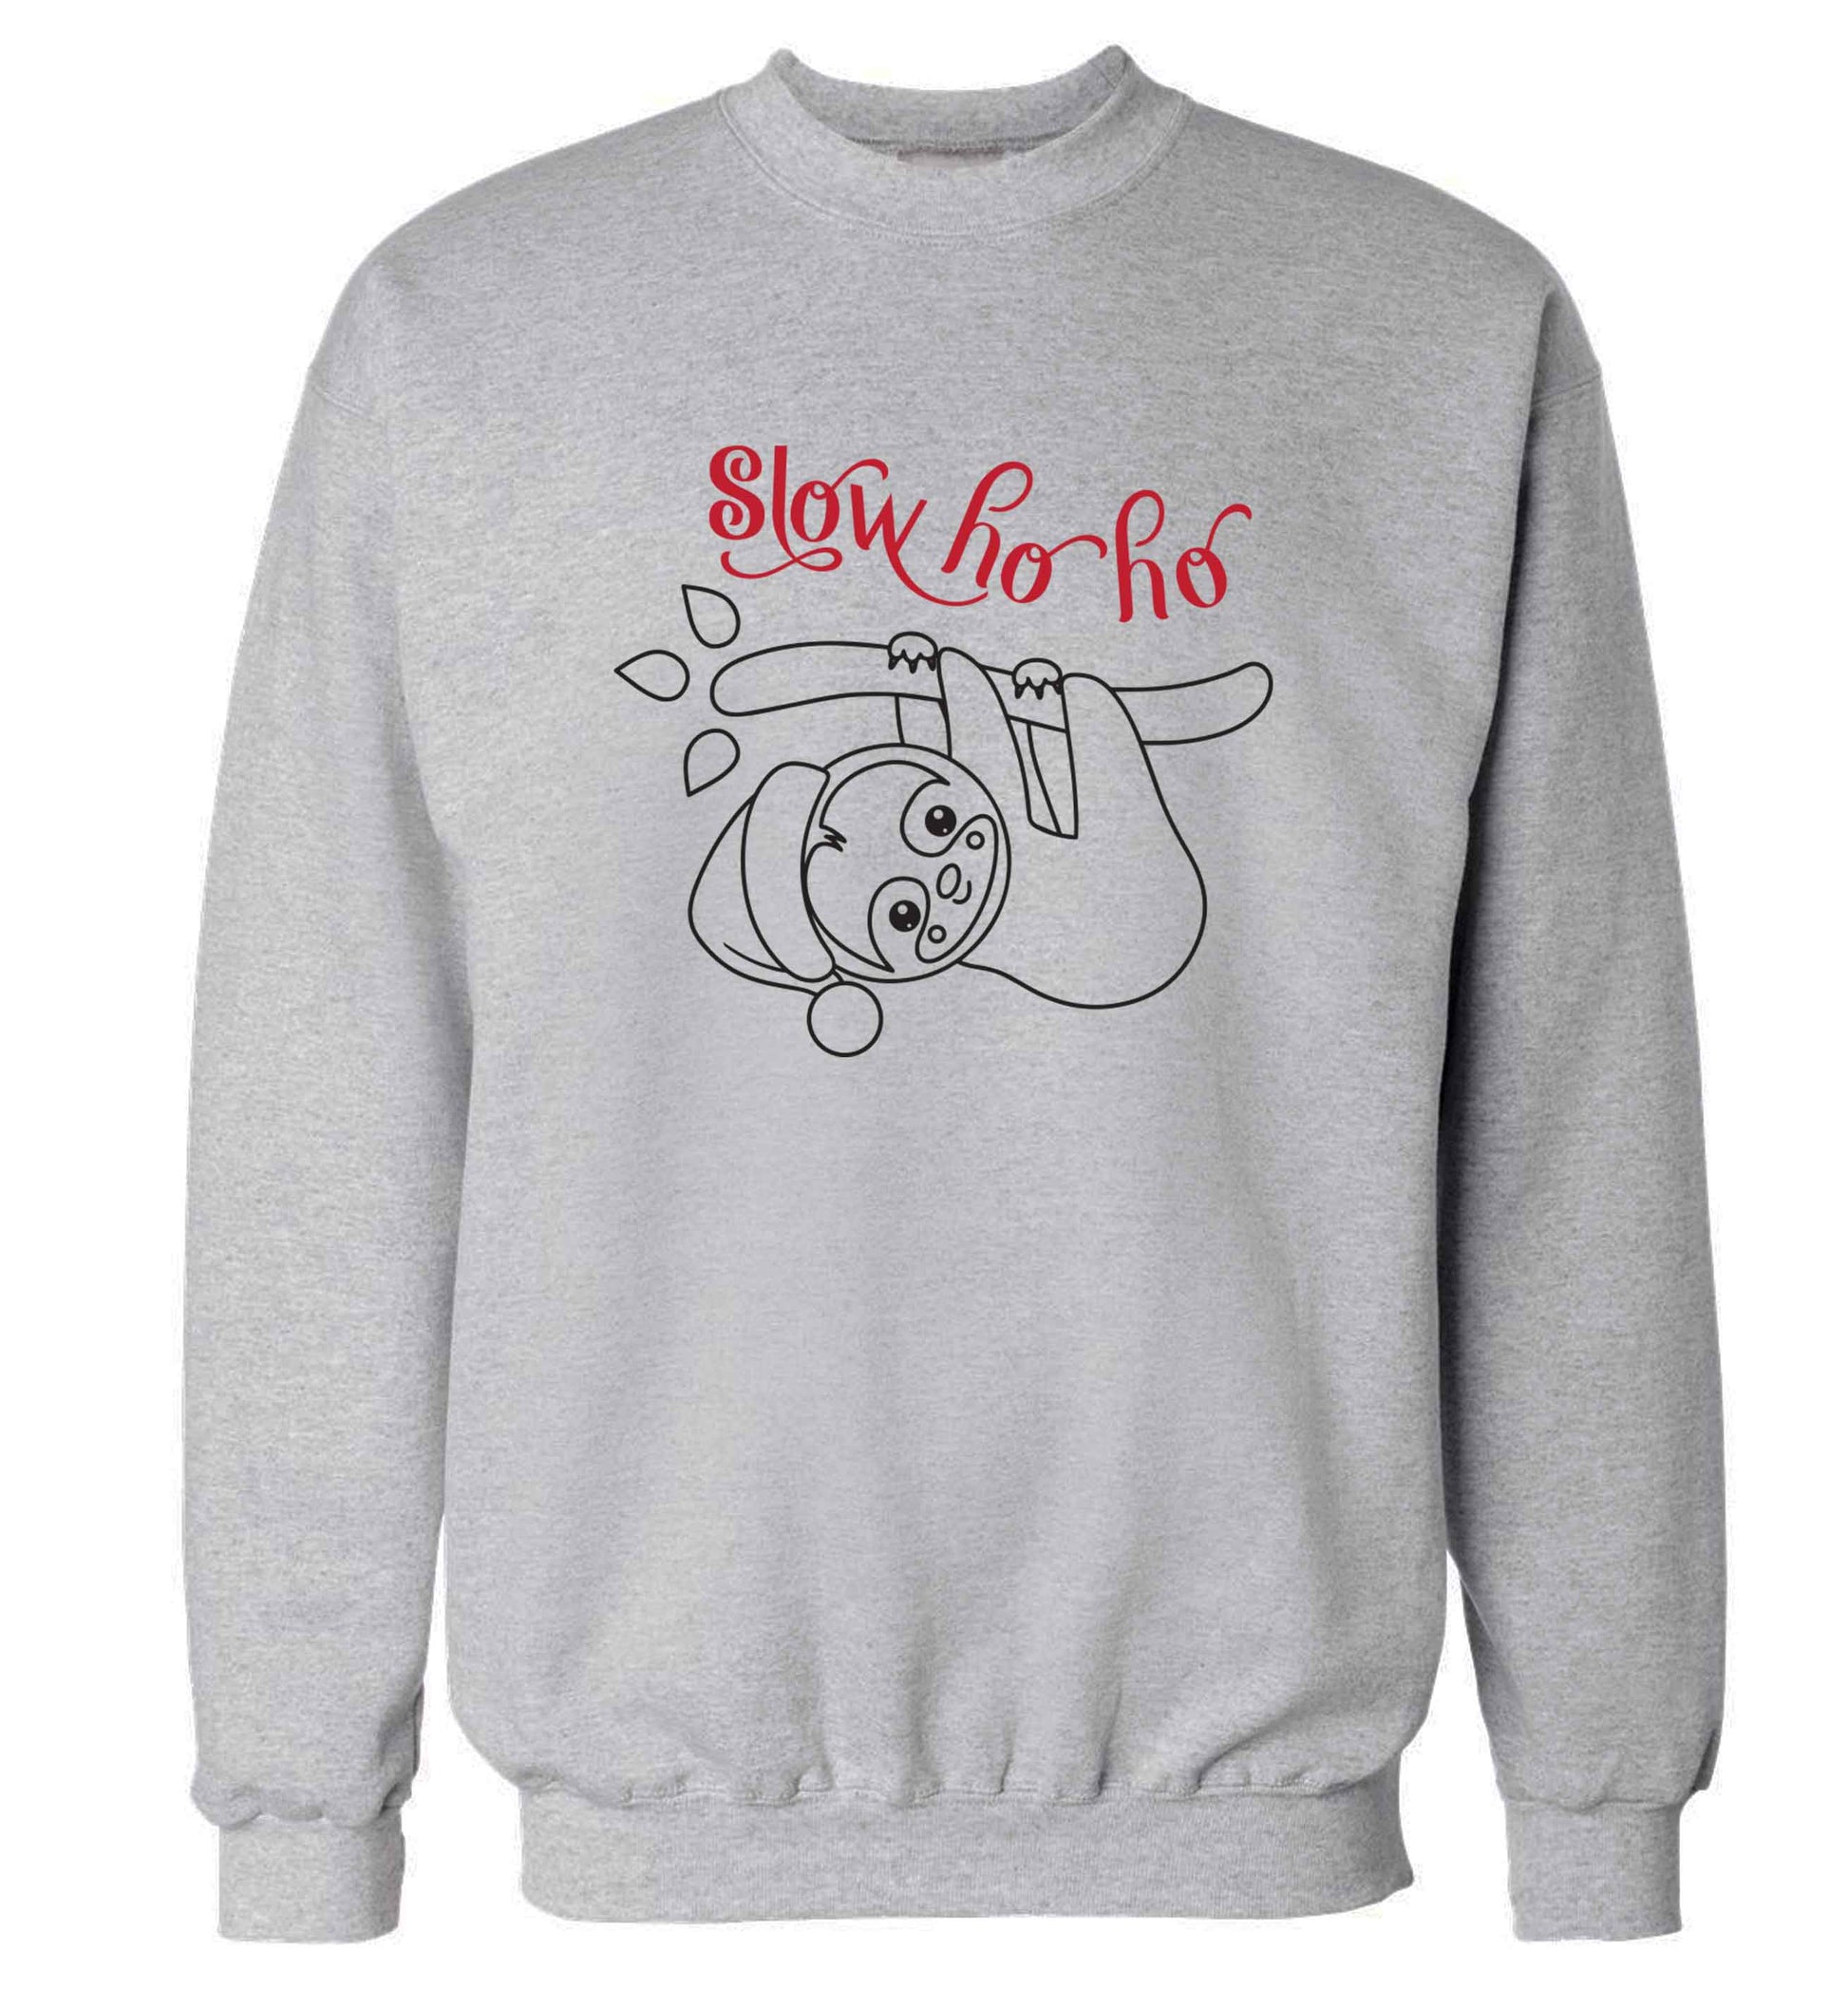 Slow Ho Ho adult's unisex grey sweater 2XL